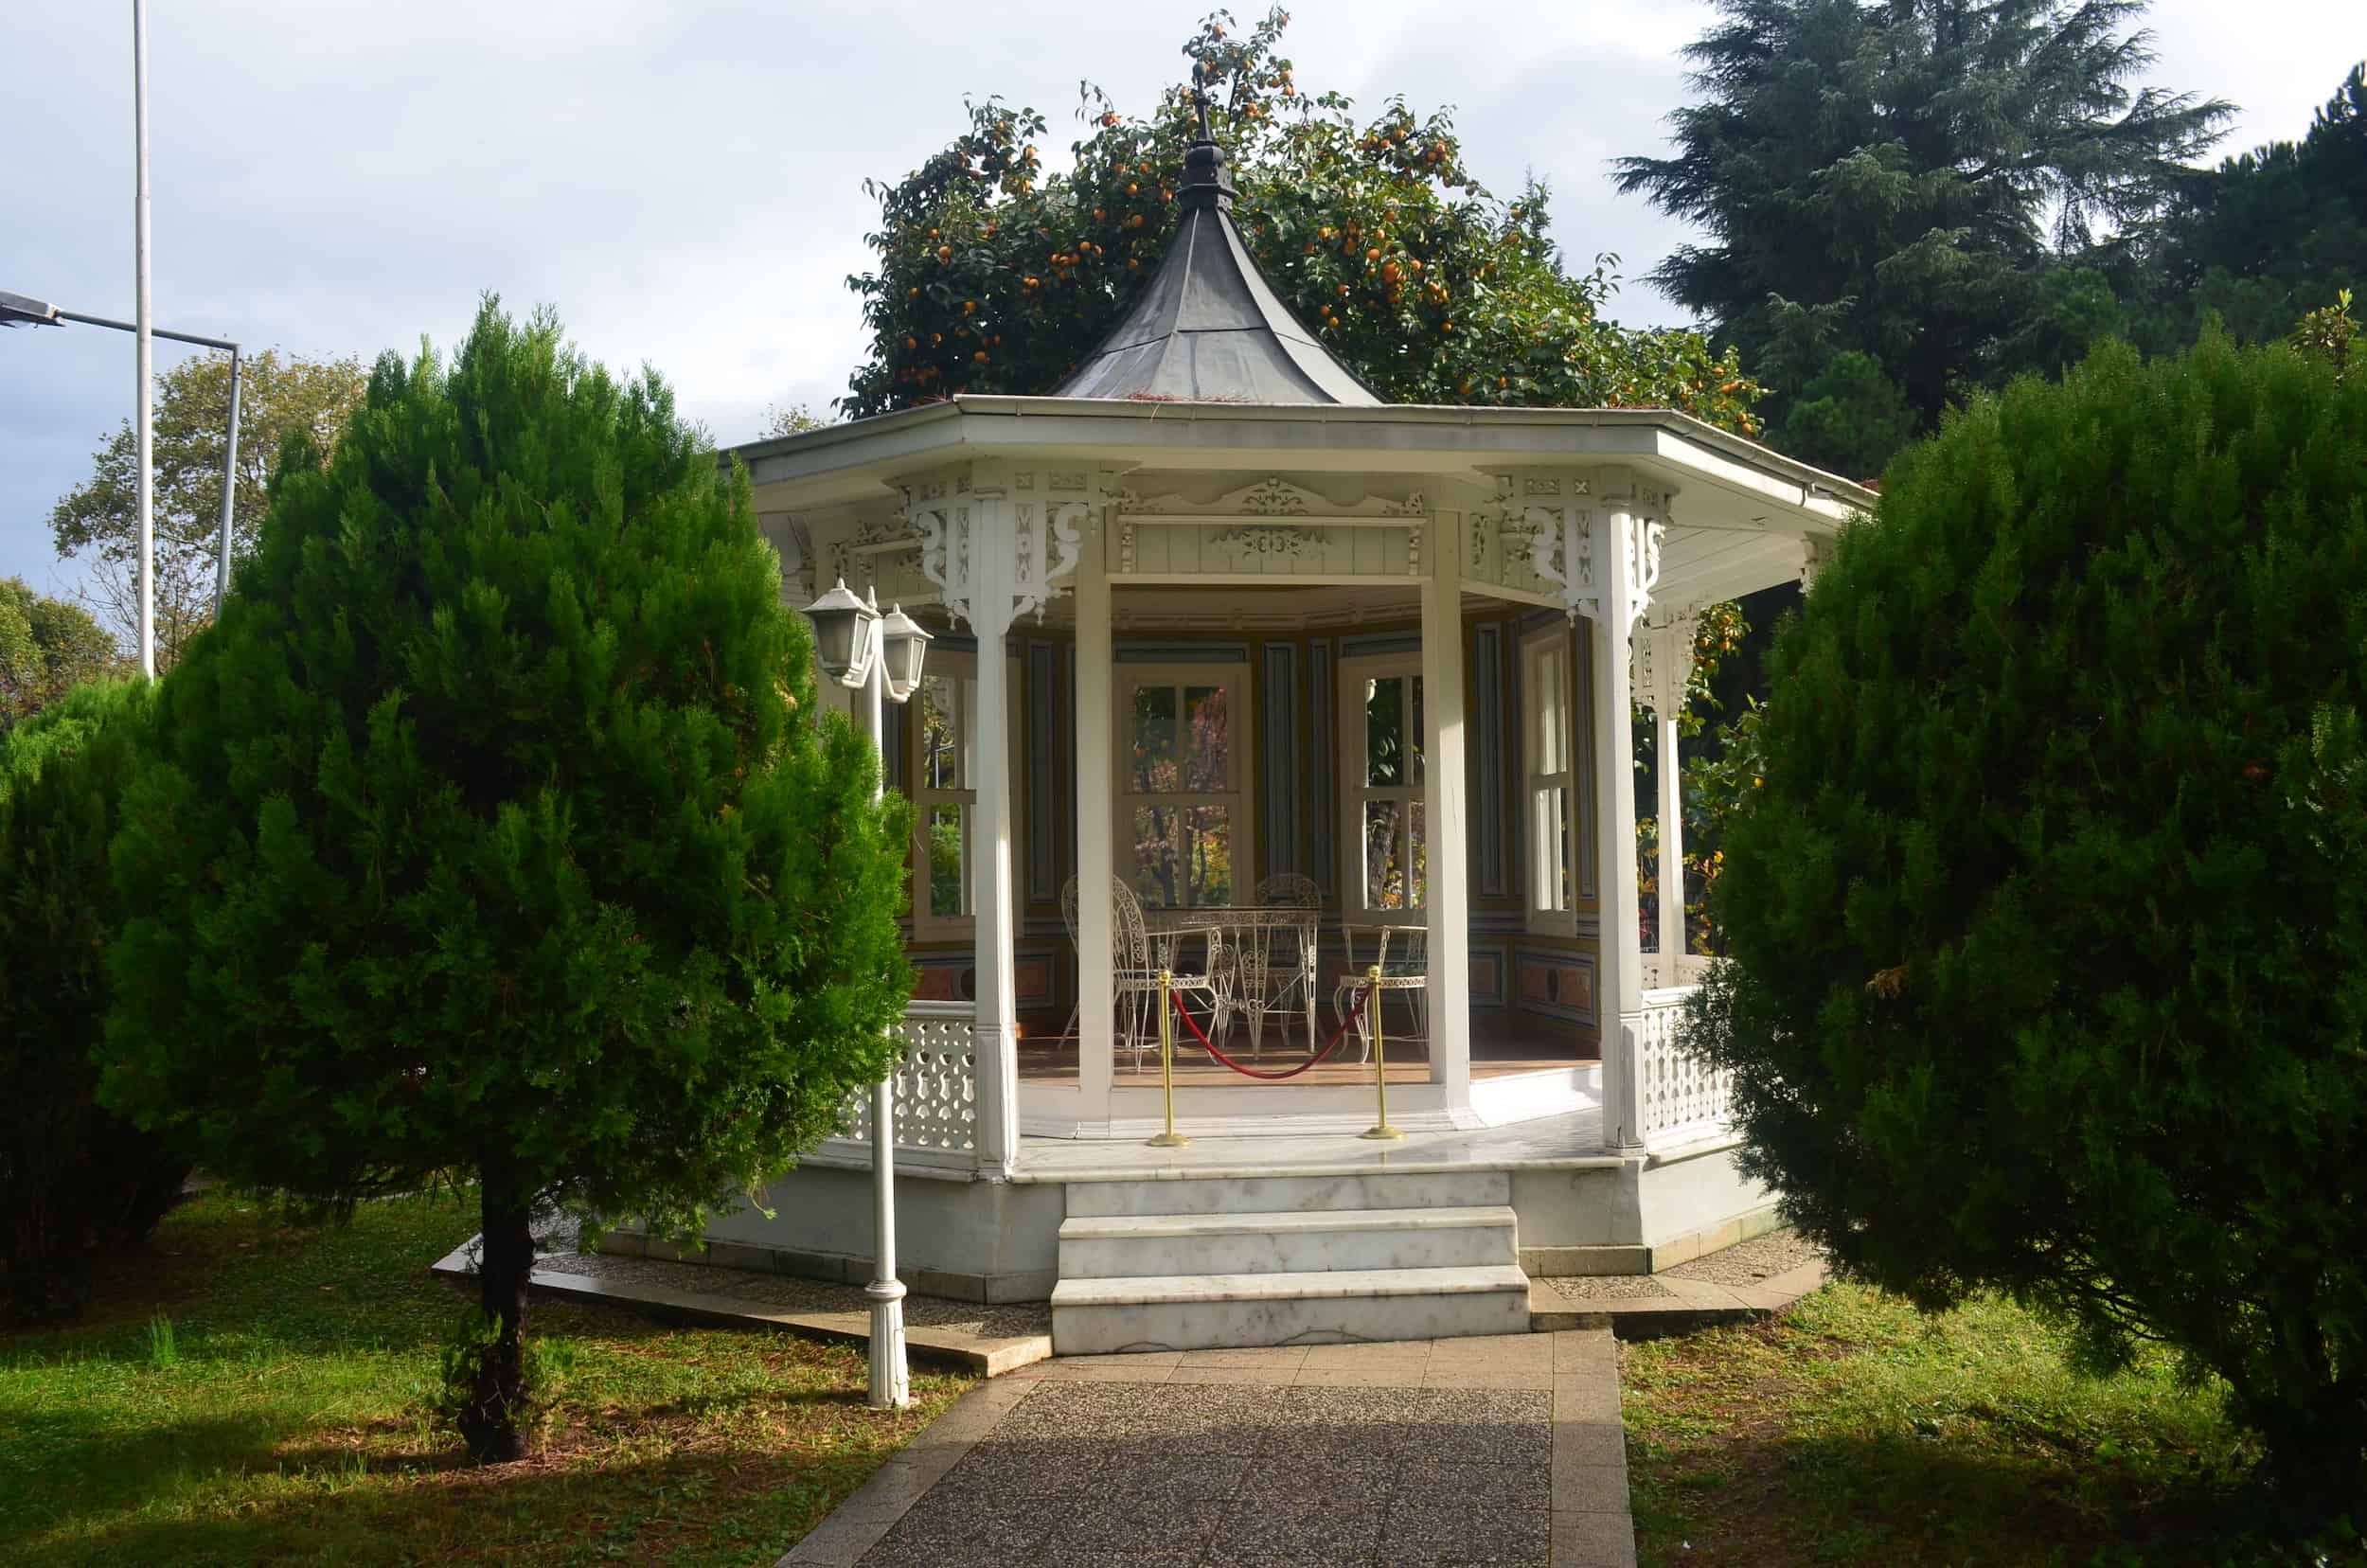 Pavilion at the Bursa Atatürk House Museum in Bursa, Turkey